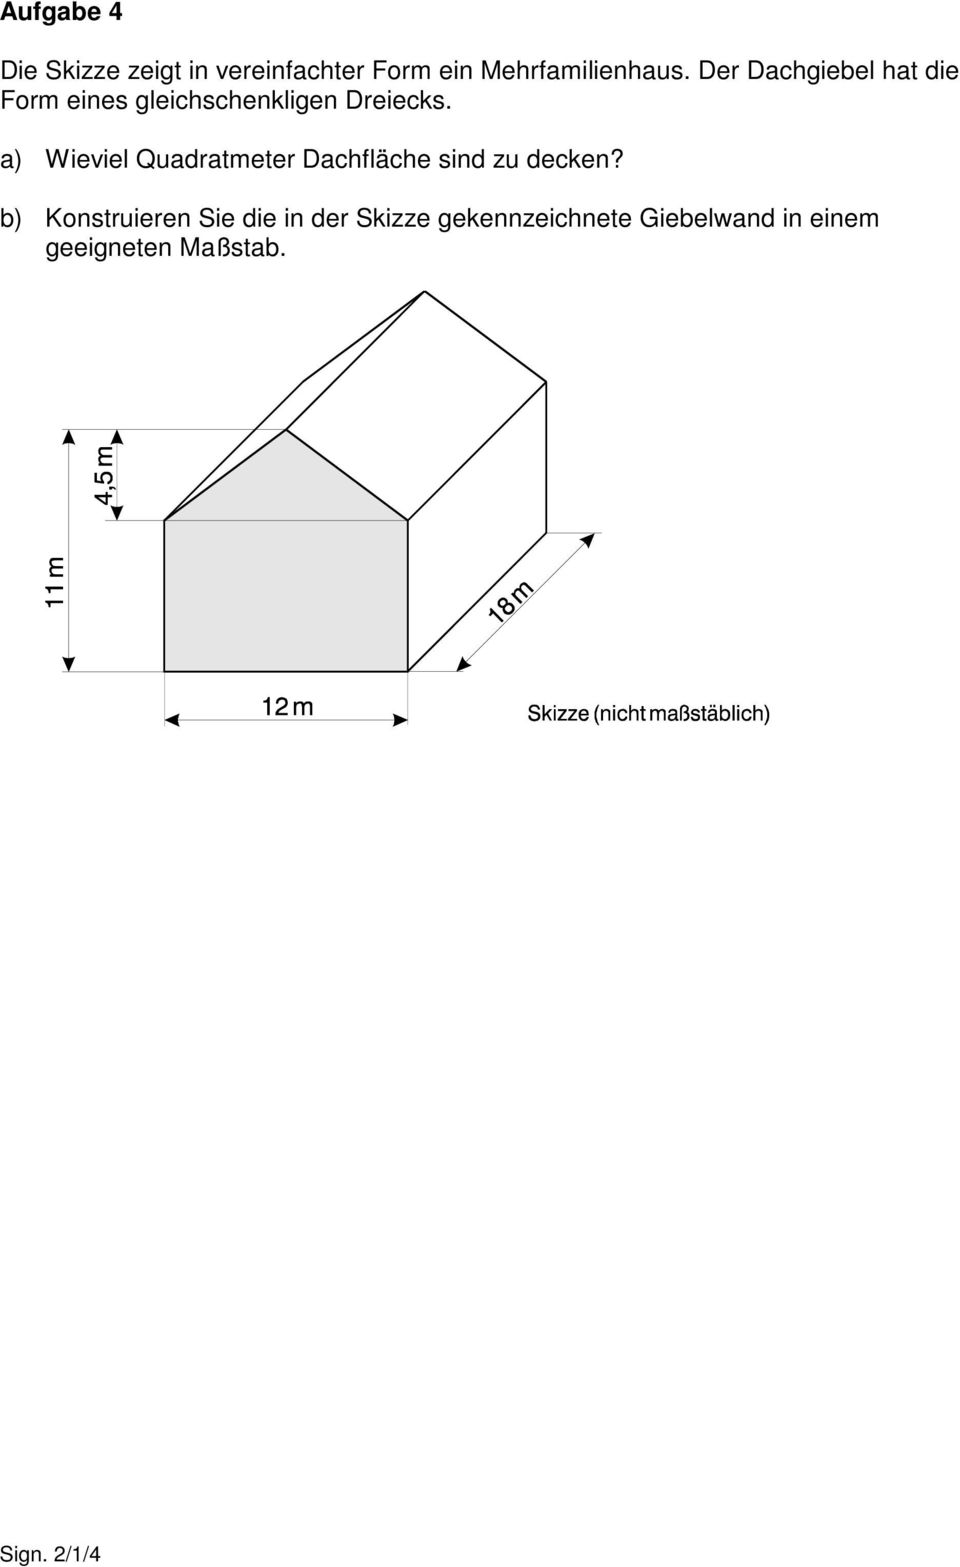 a) Wieviel Quadratmeter Dachfläche sind zu decken?